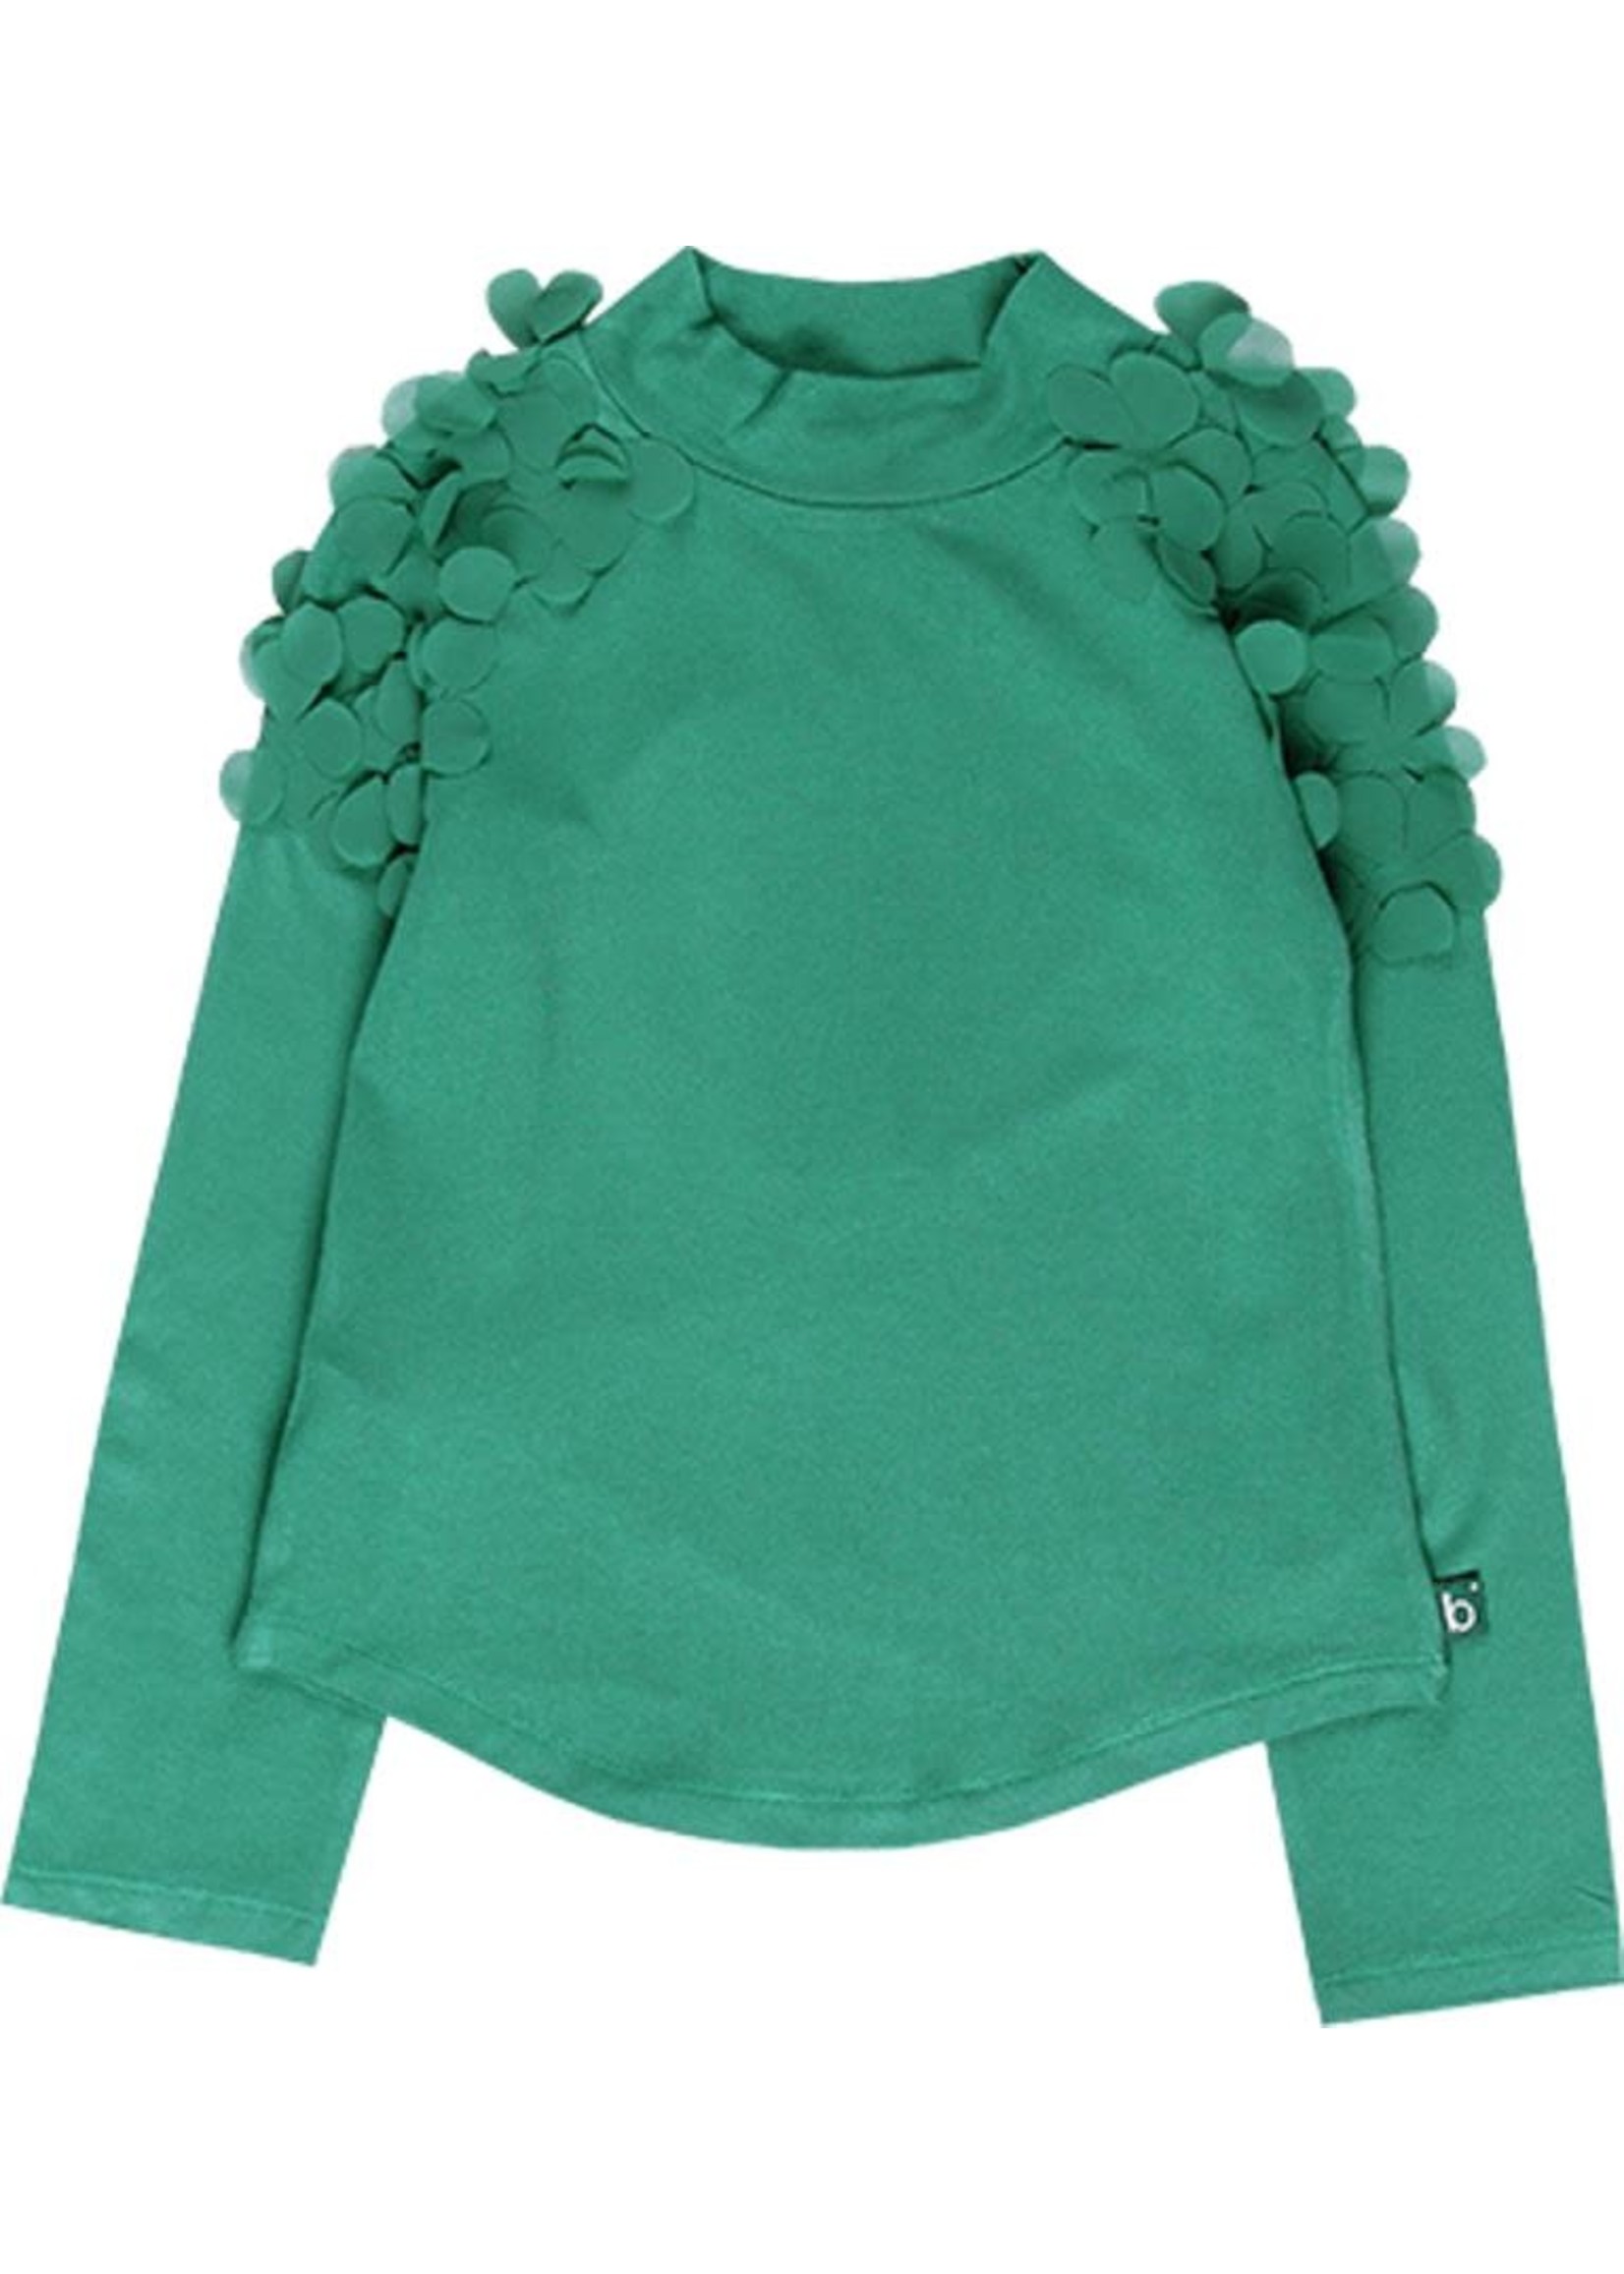 Boboli Boboli Stretch knit t-Shirt for girl chlorophyll 728063